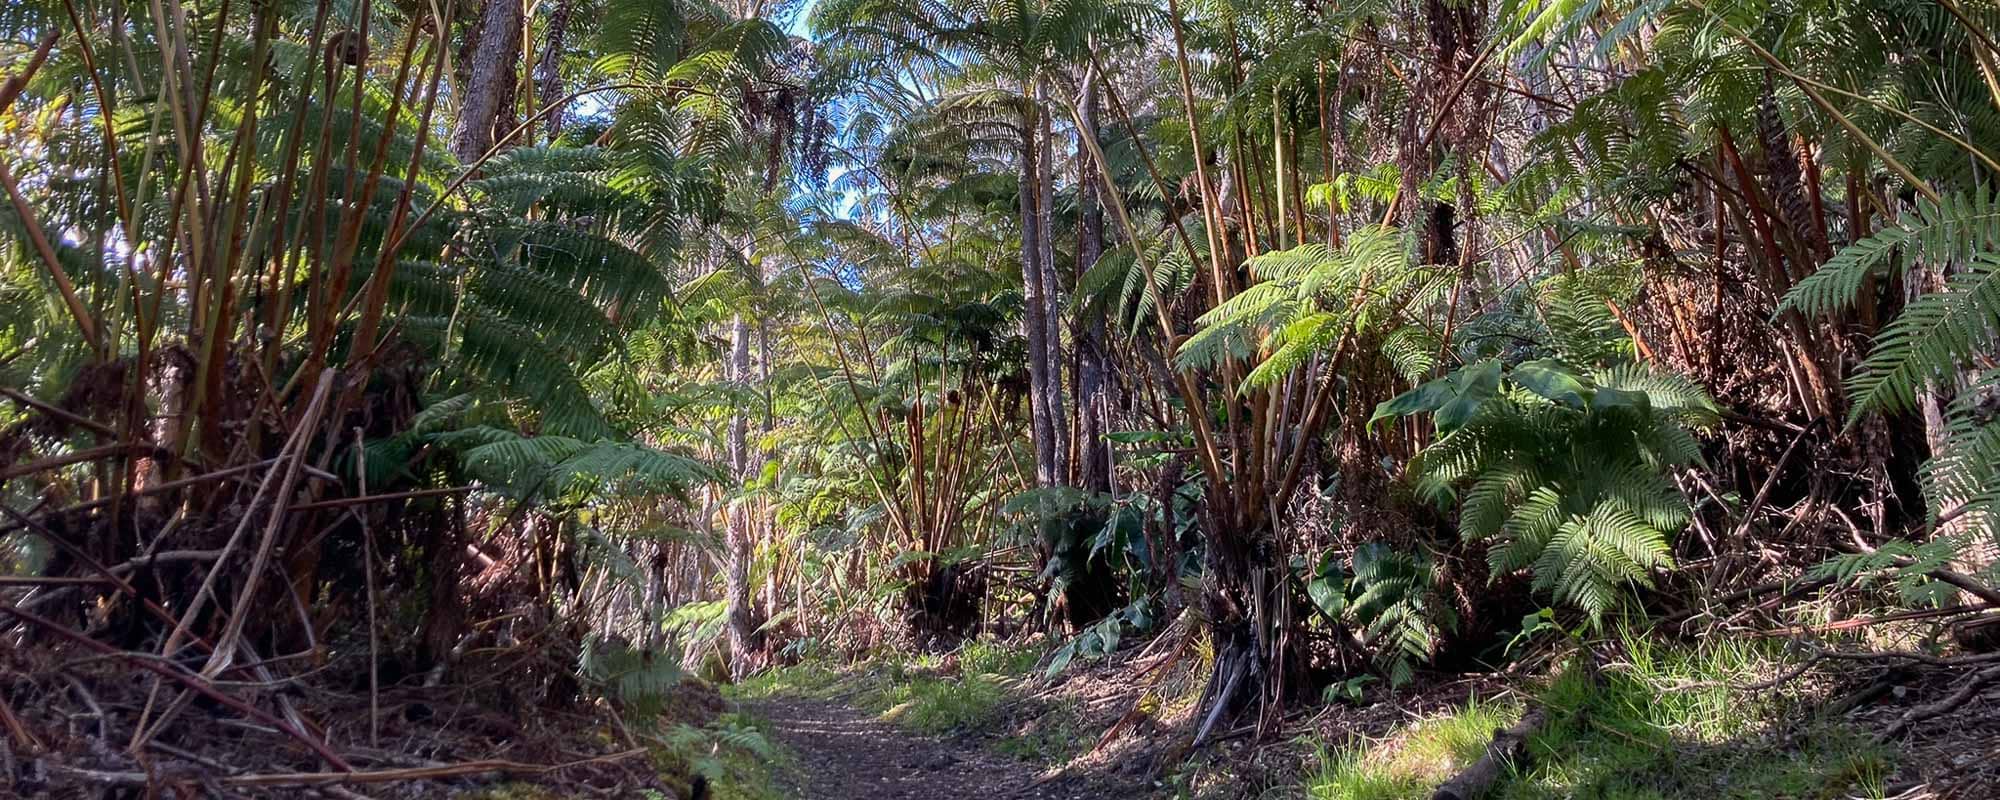 Halema‘uma‘u Trail through tropical rain forest in Hawai'i Volcanoes National Park, Big Island